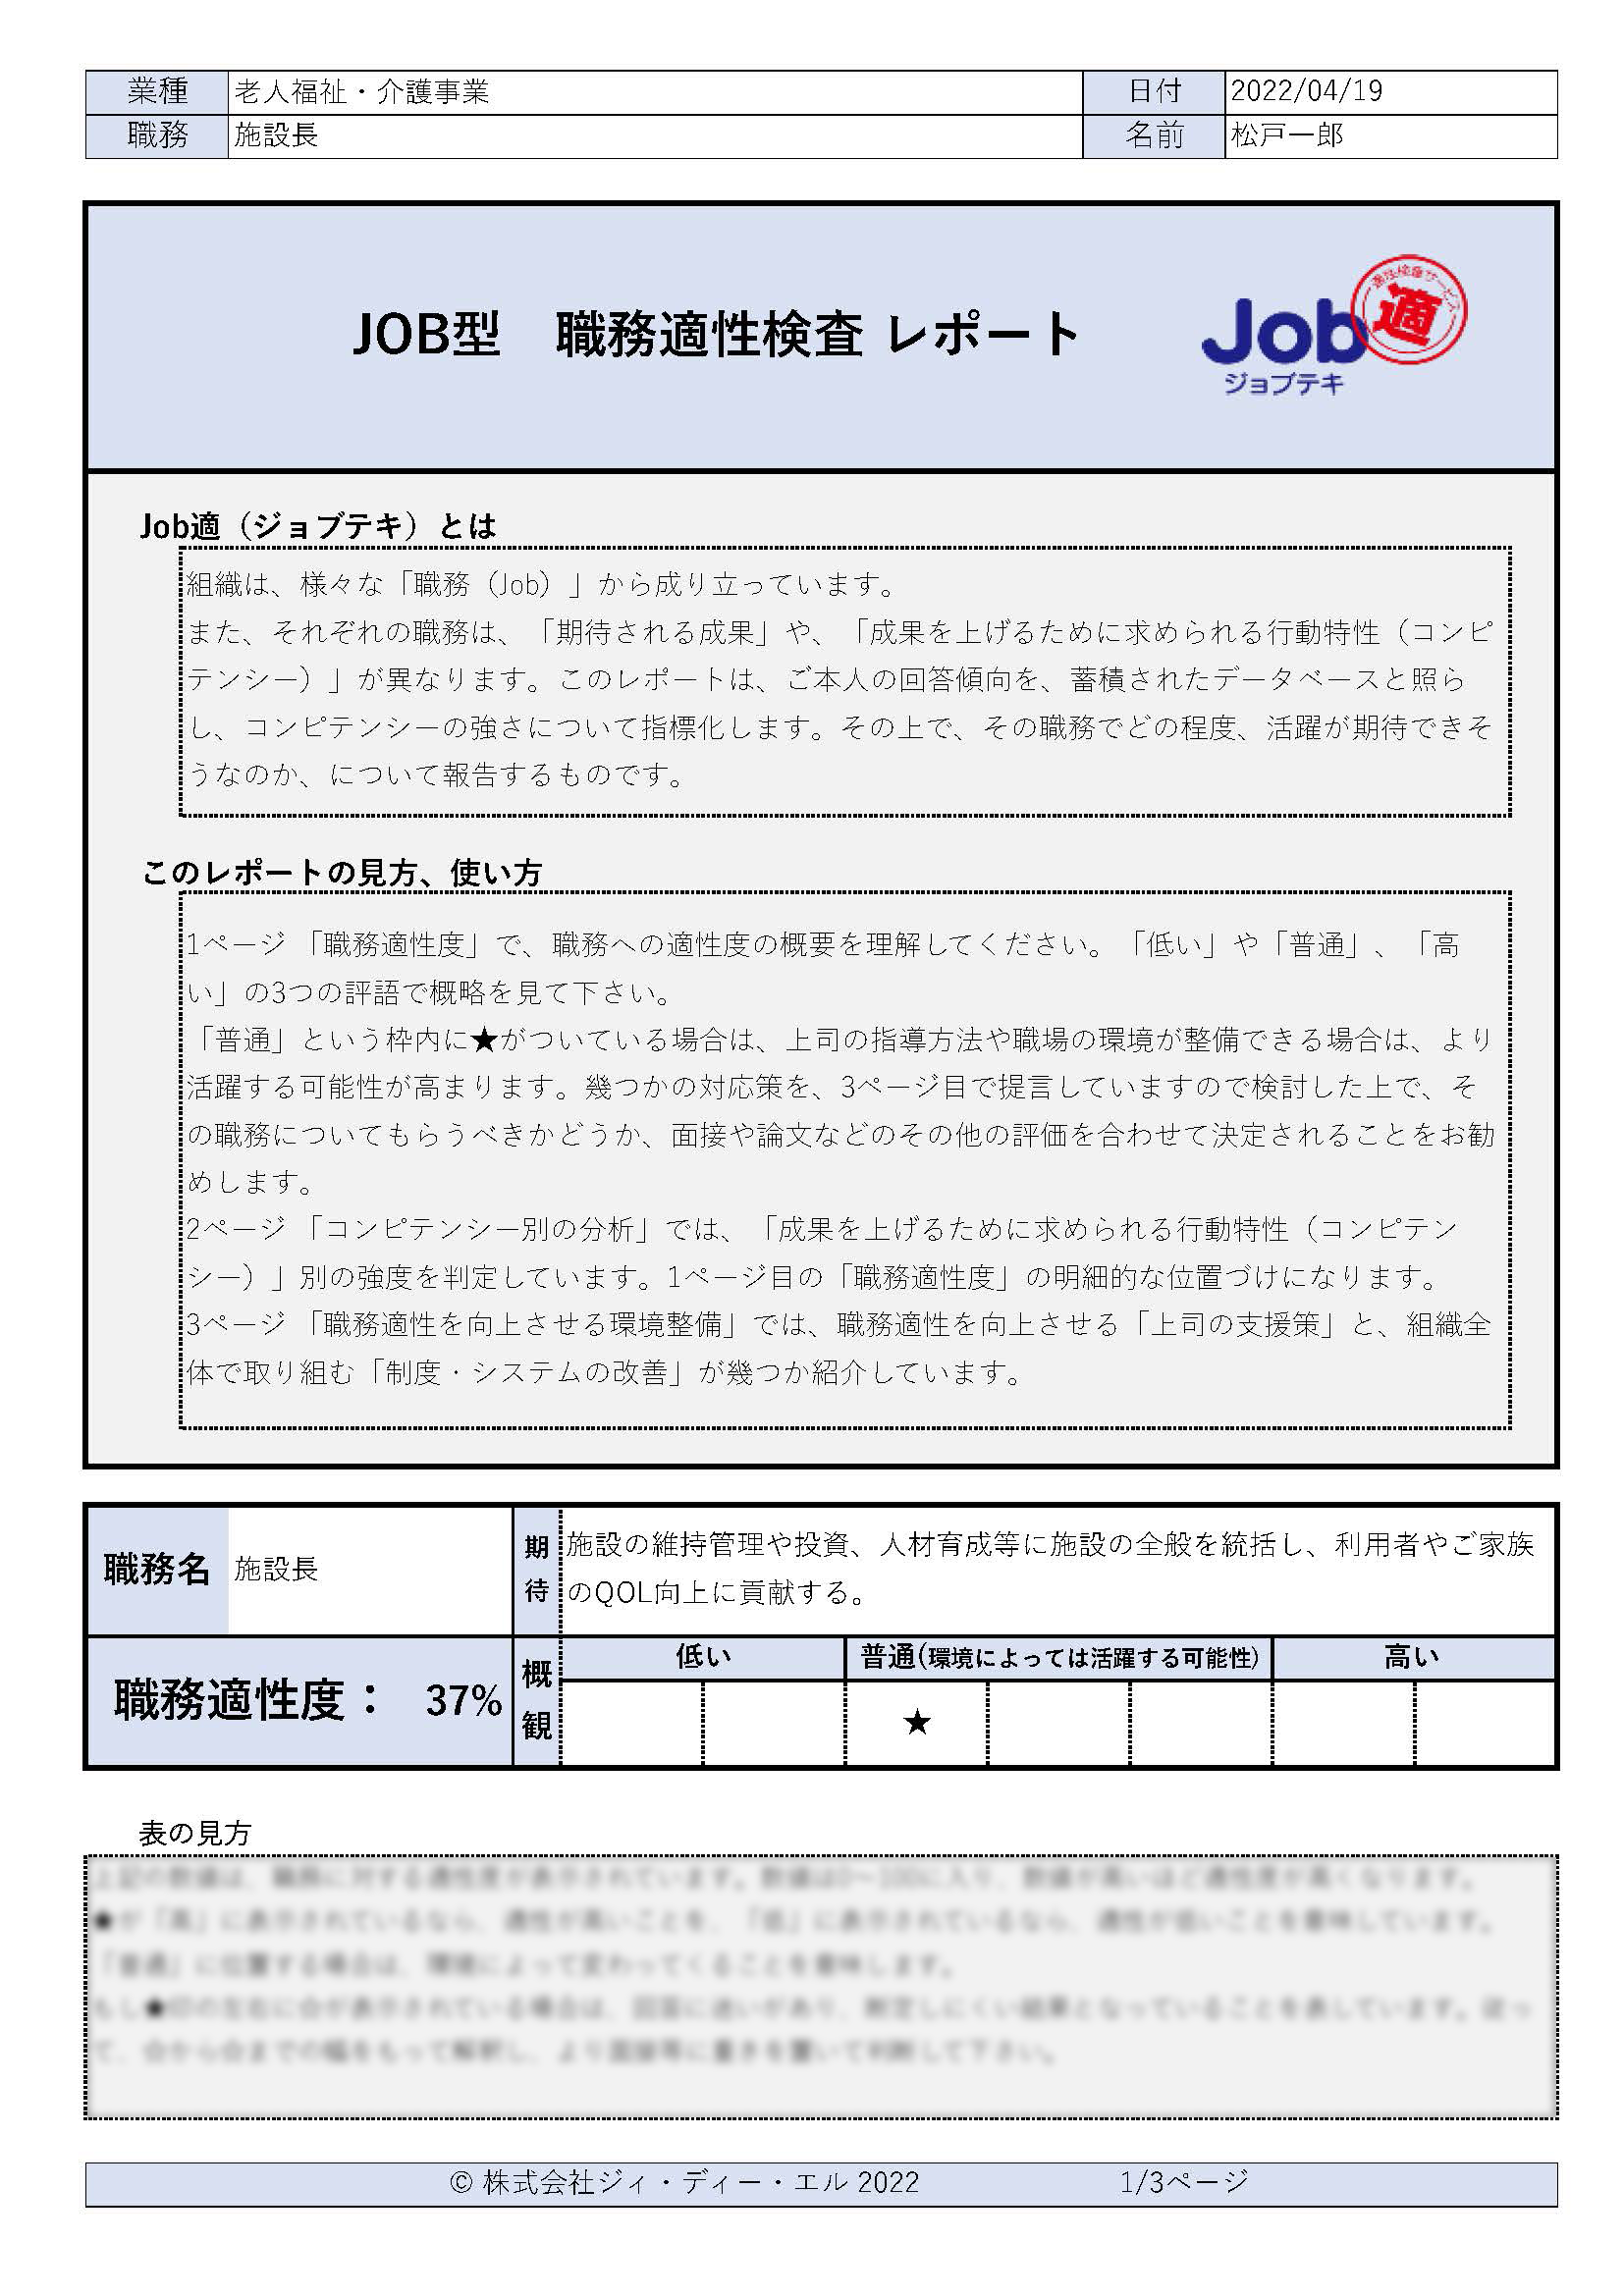 Job適_report1.png